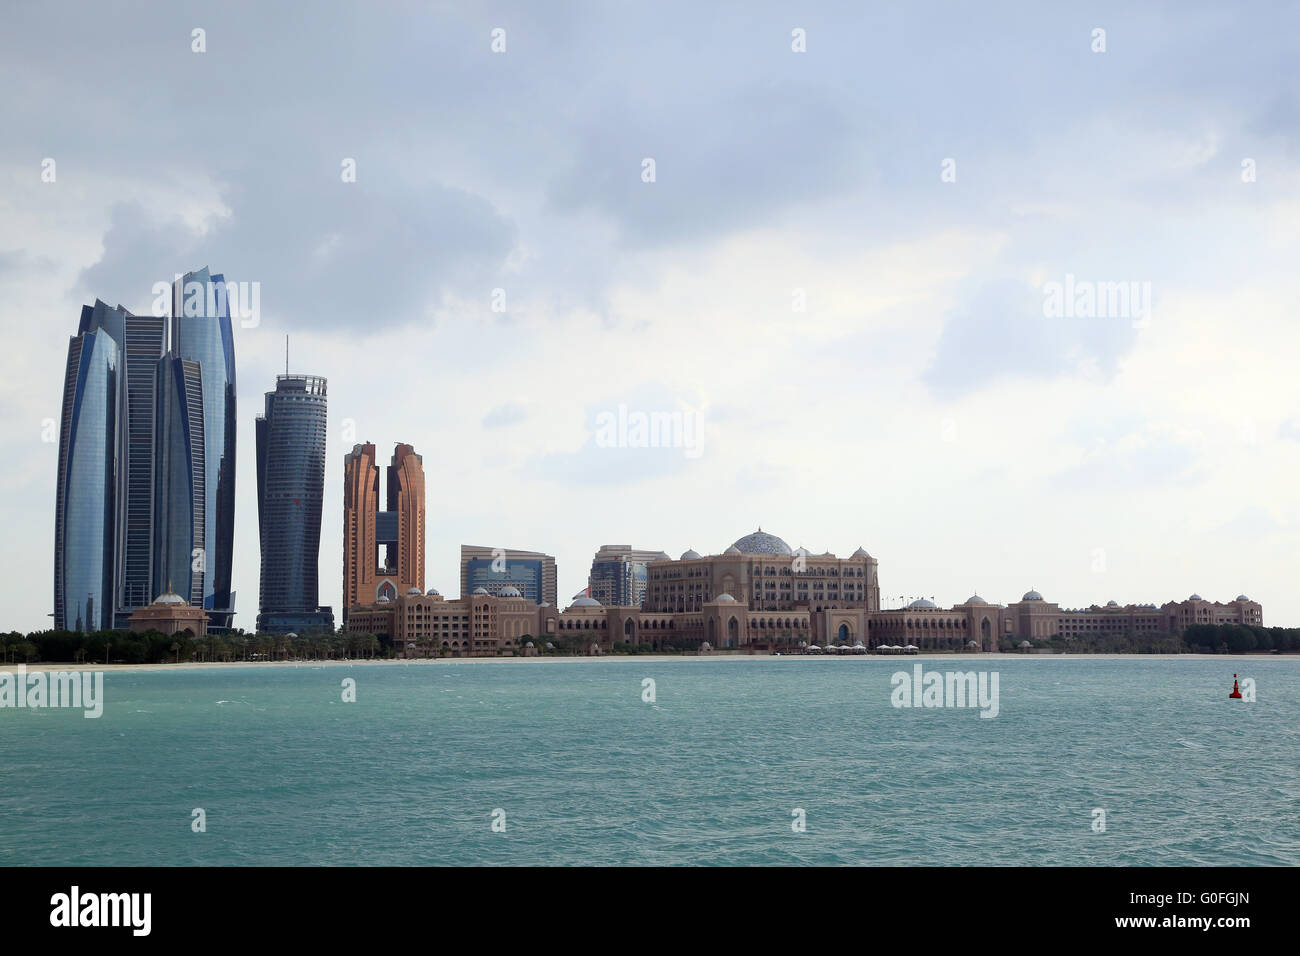 Skyline di Abu Dhabi con Ethiad torri e l'Emirates Palace Hotel Foto Stock